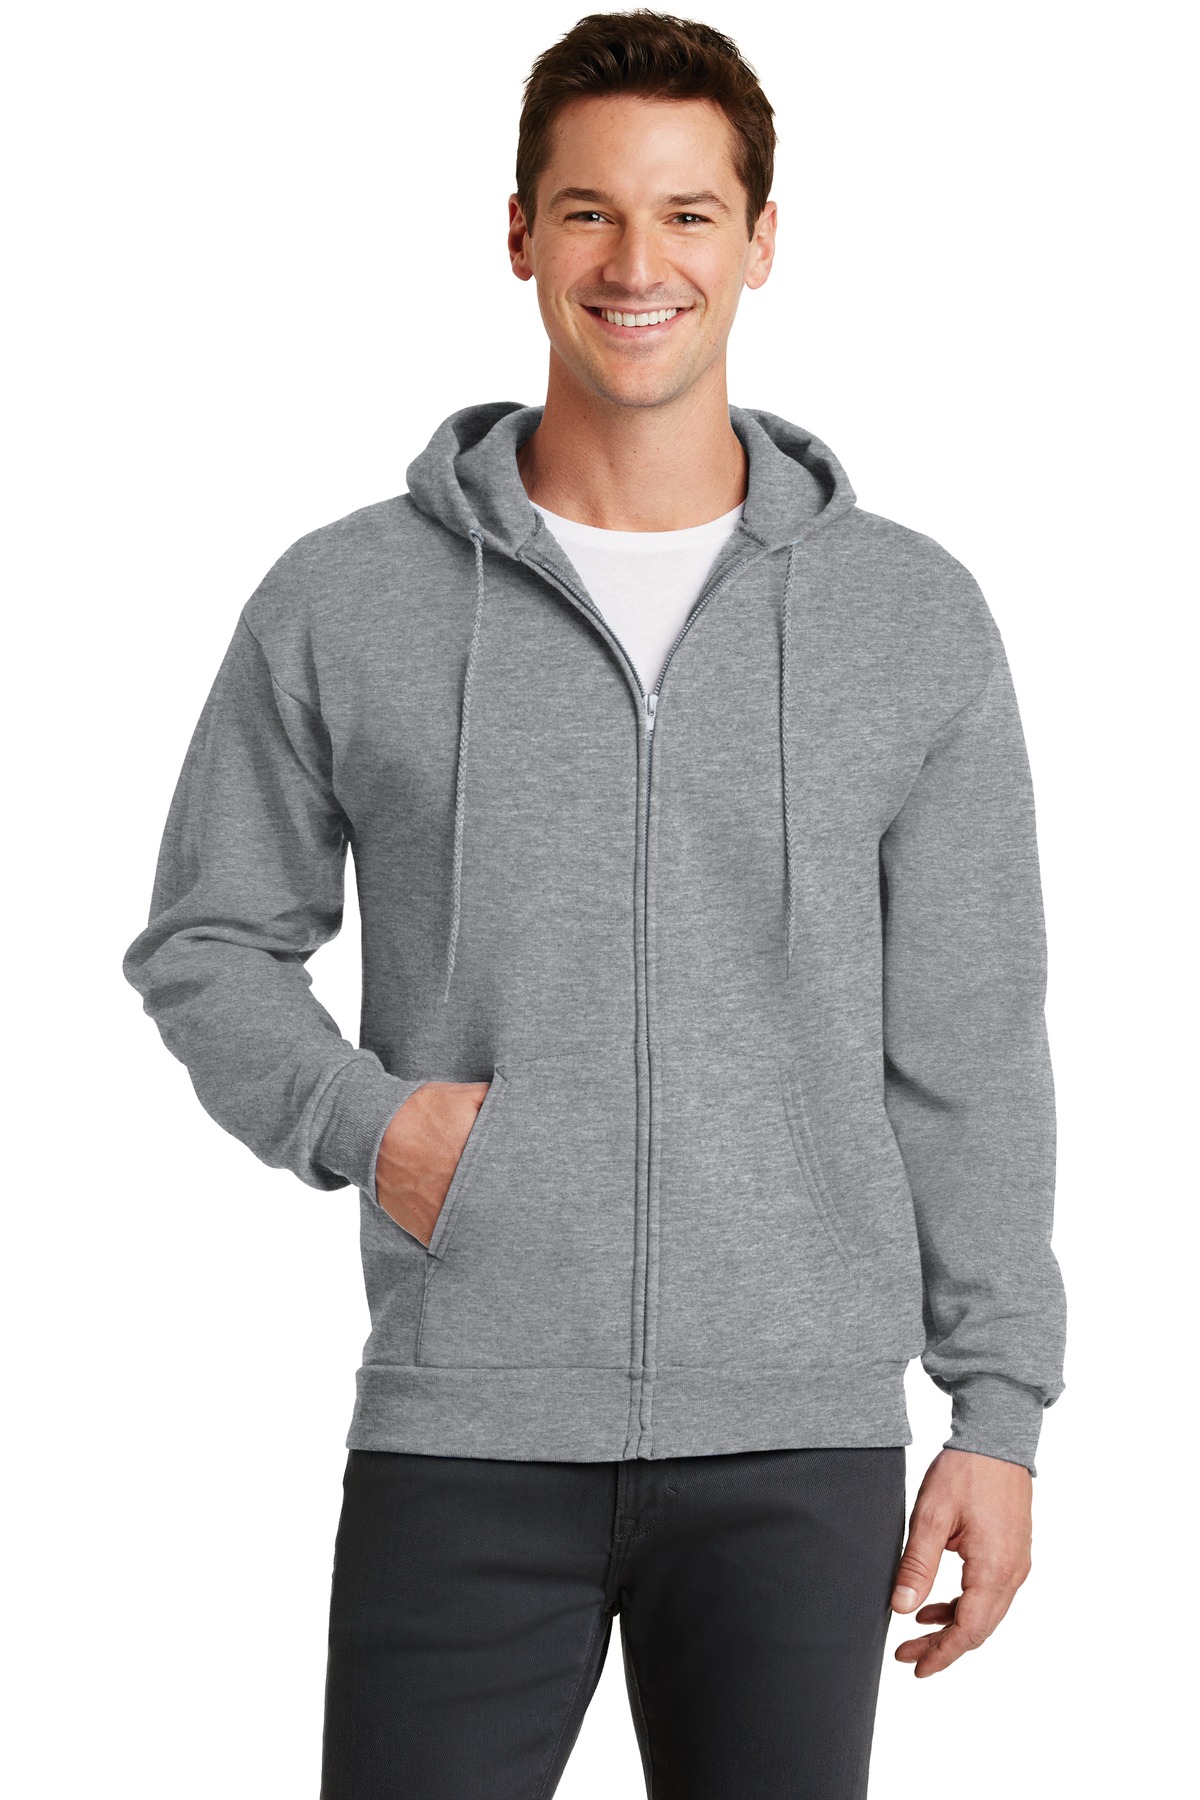 Port & Company Men's Classic Full-Zip Hooded Sweatshirt PC78ZH - image 1 of 4